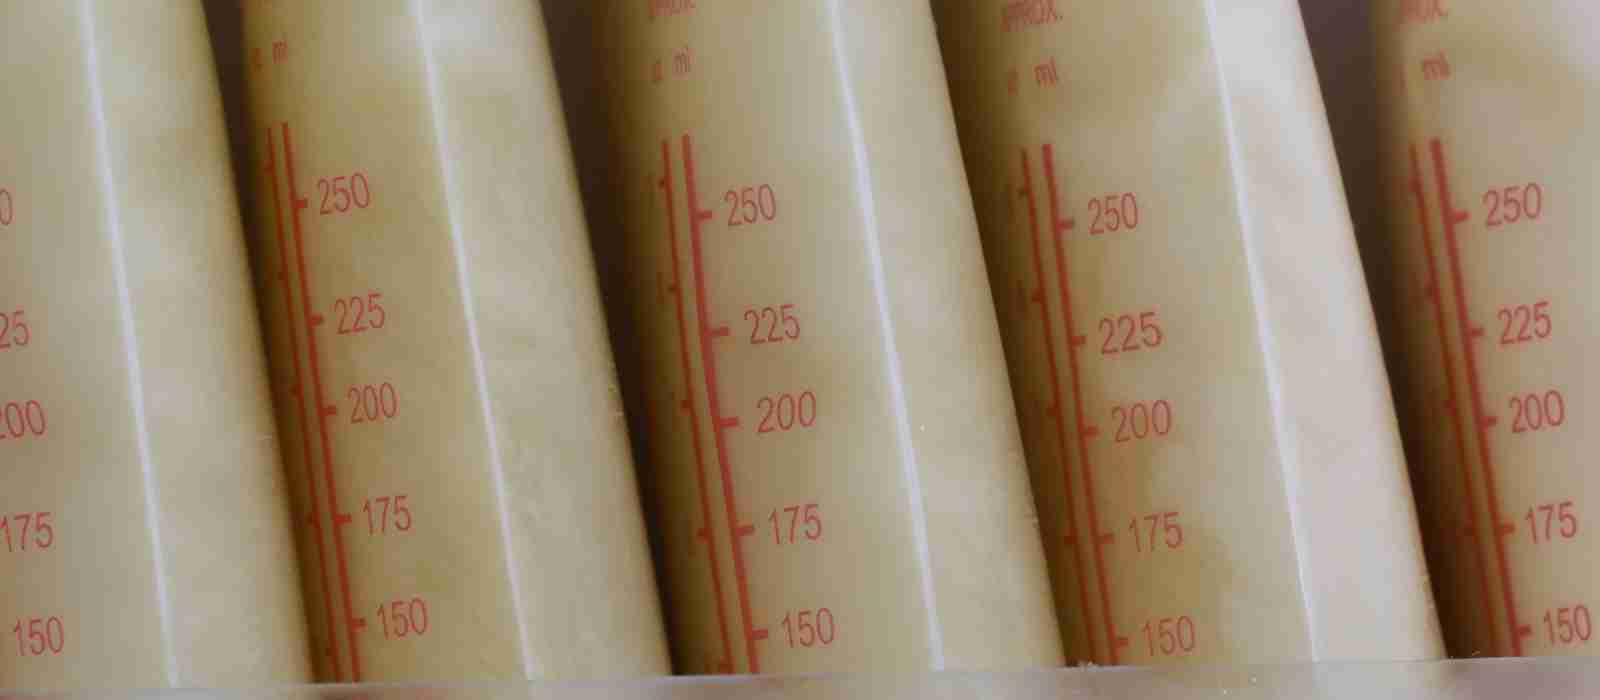 Do Breast Milk Storage Bags Expire